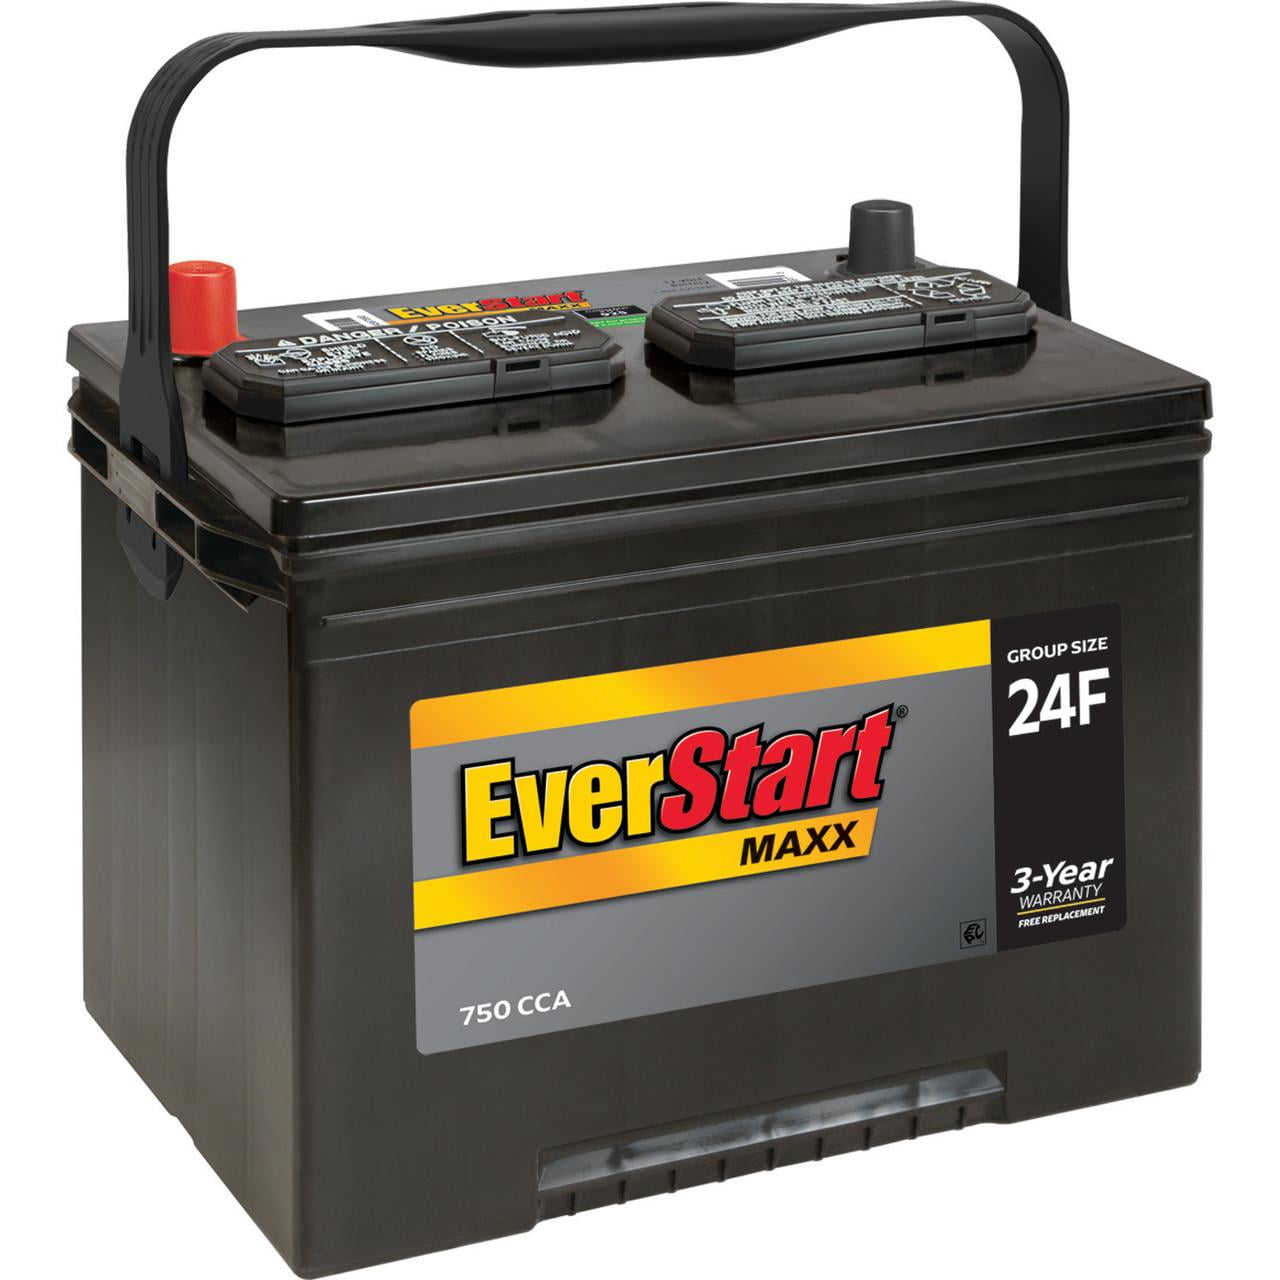 buy-everstart-maxx-lead-acid-automotive-battery-group-size-24f-online